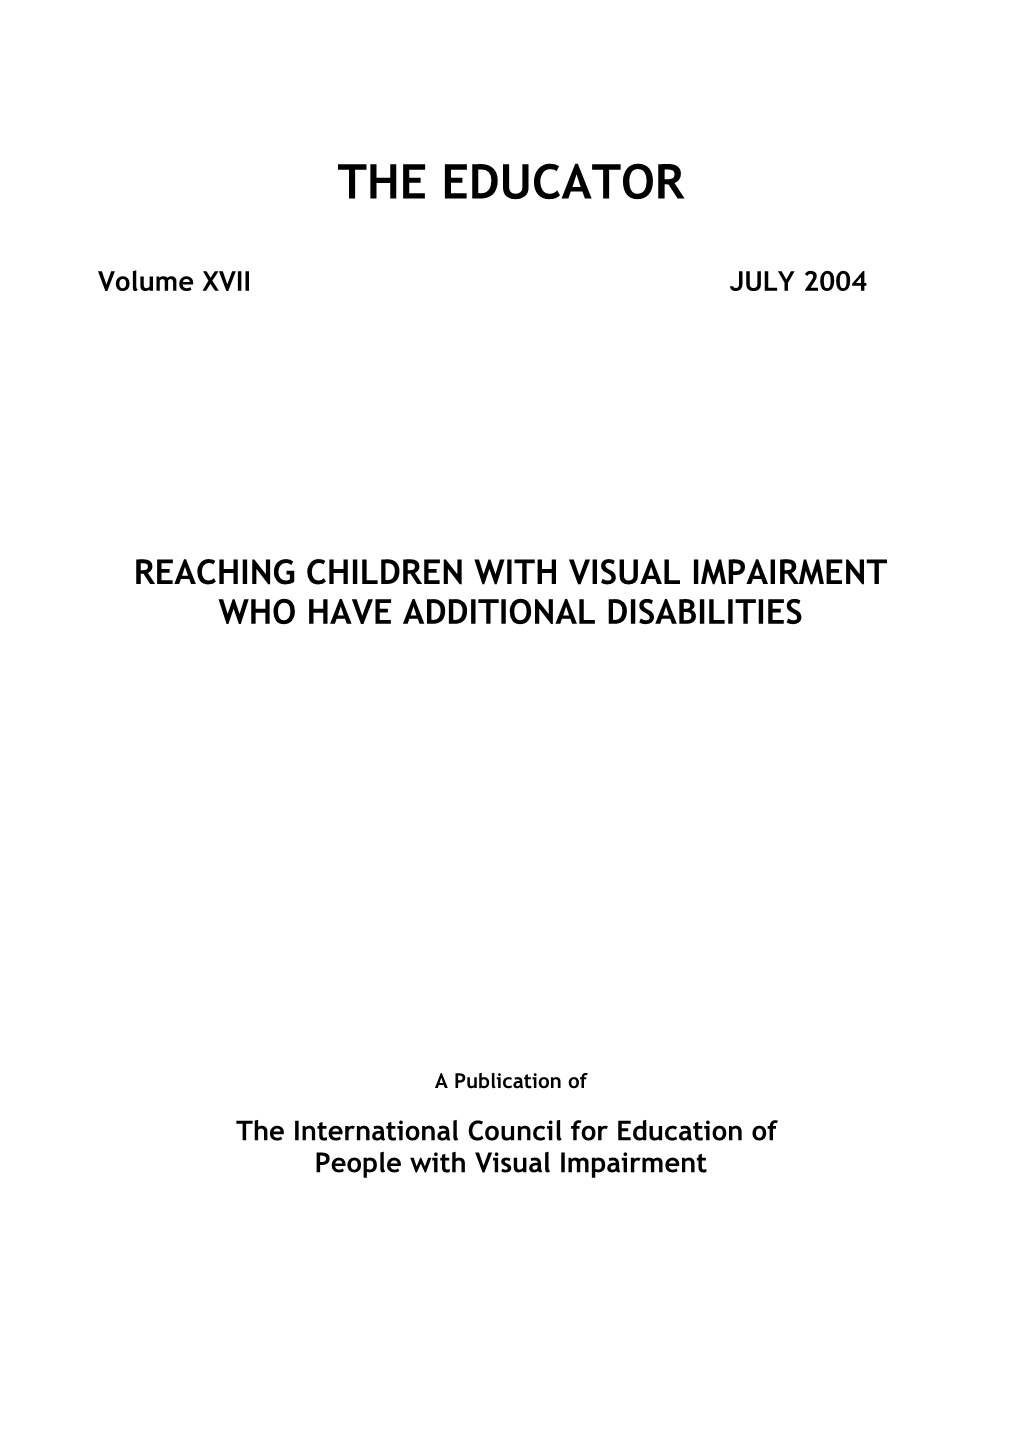 Reaching Children with Visual Impairment